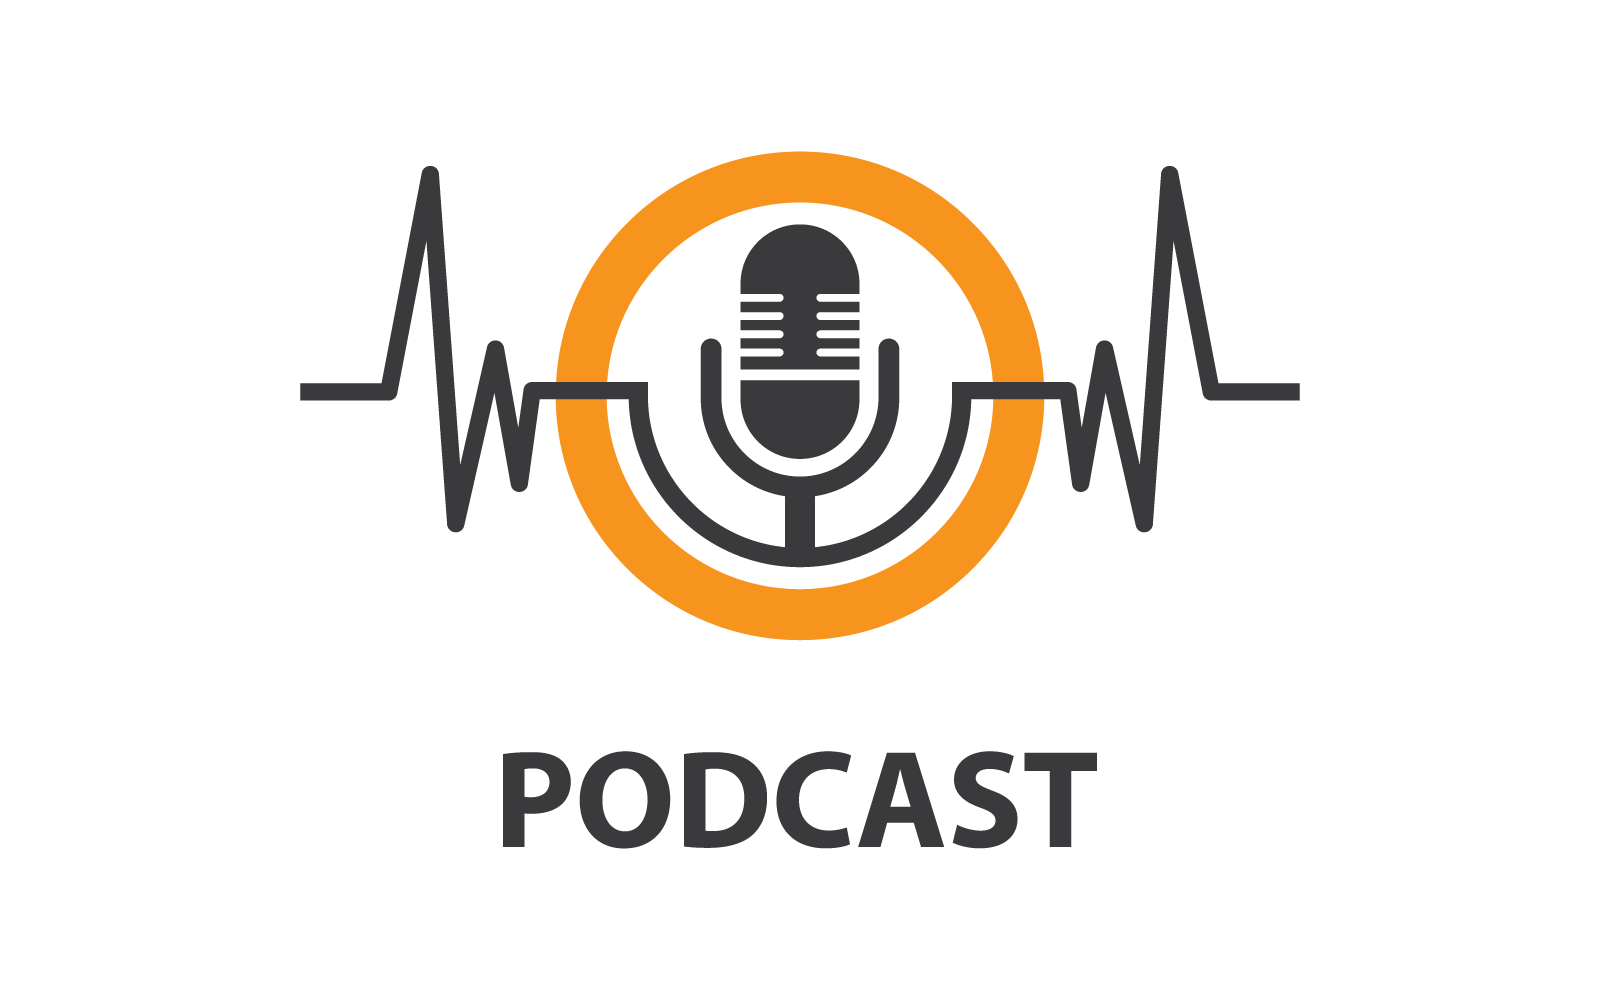 Podcast Logo wektor Płaska konstrukcja szablon ilustracja eps 10